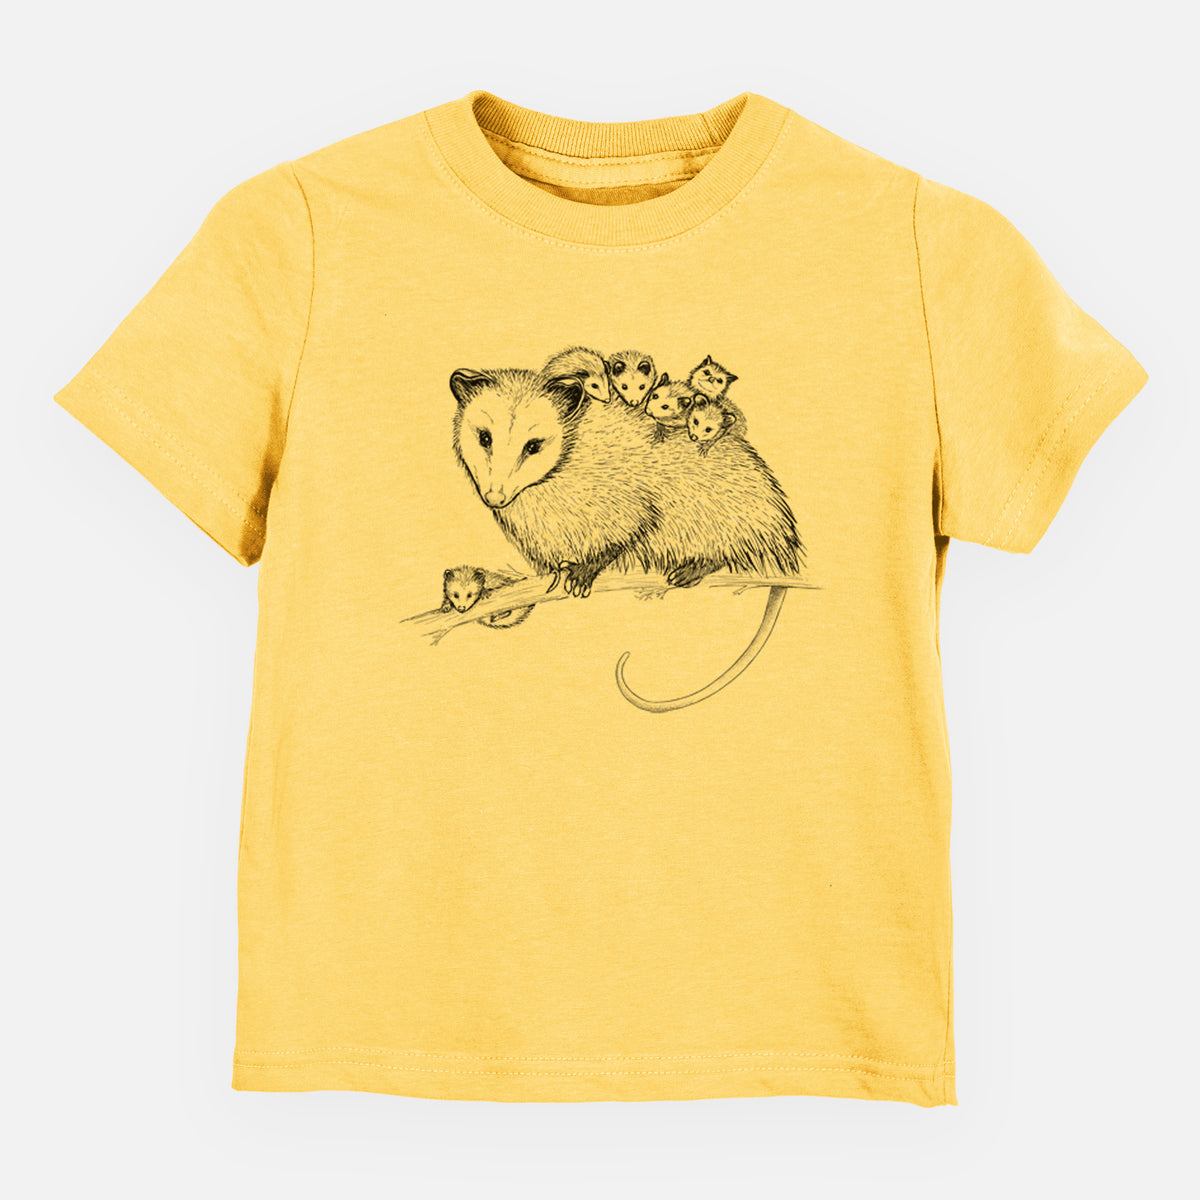 Mama Opossum with Babies - Kids Shirt